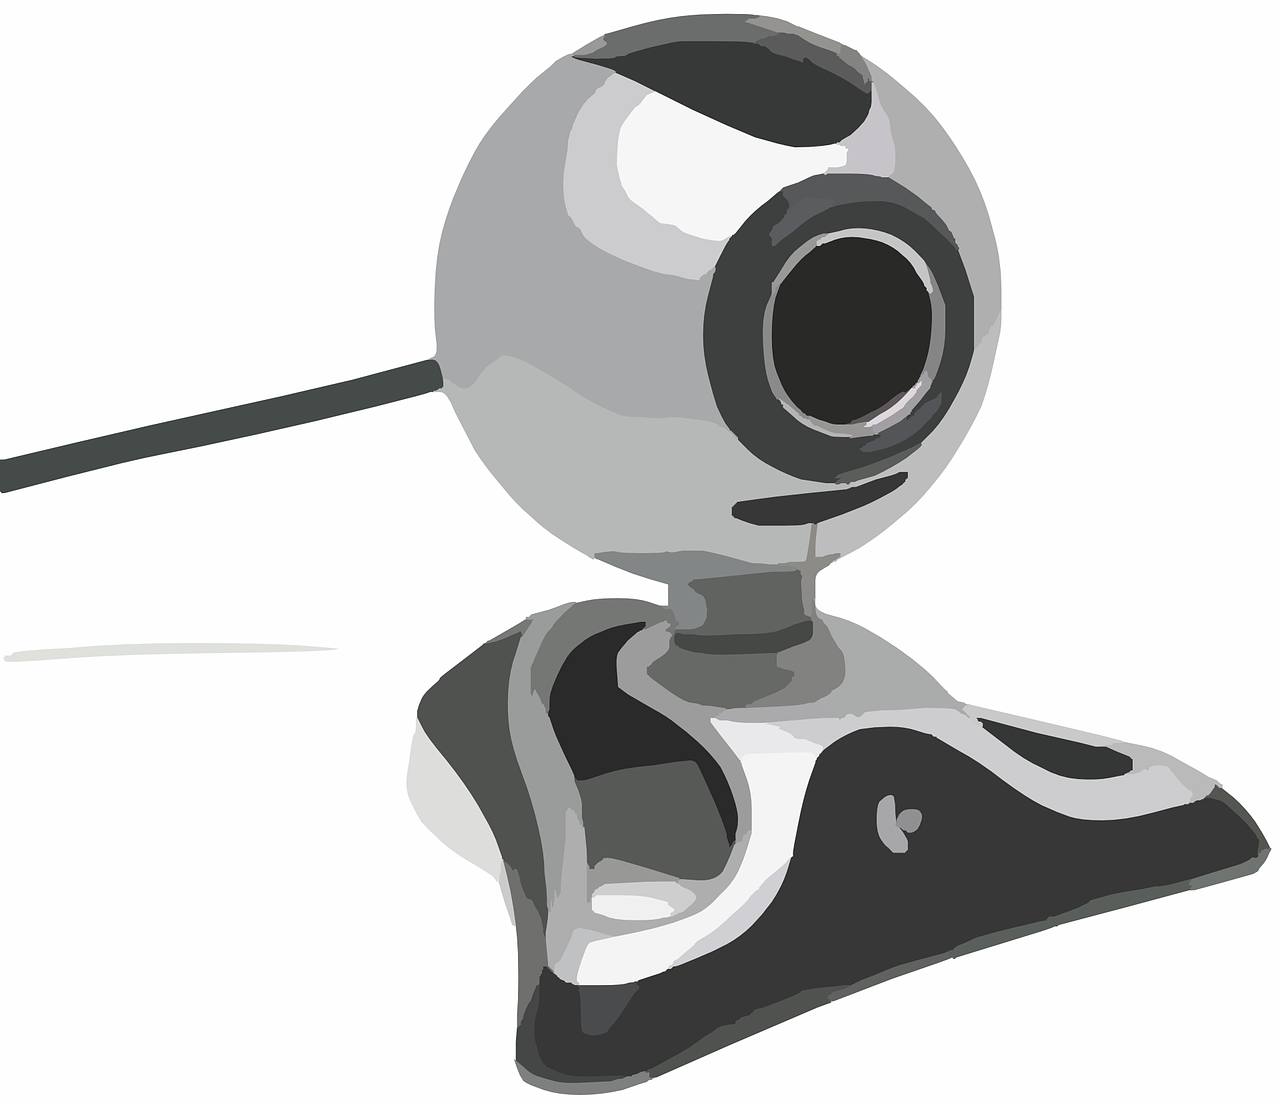 Image of a webcam